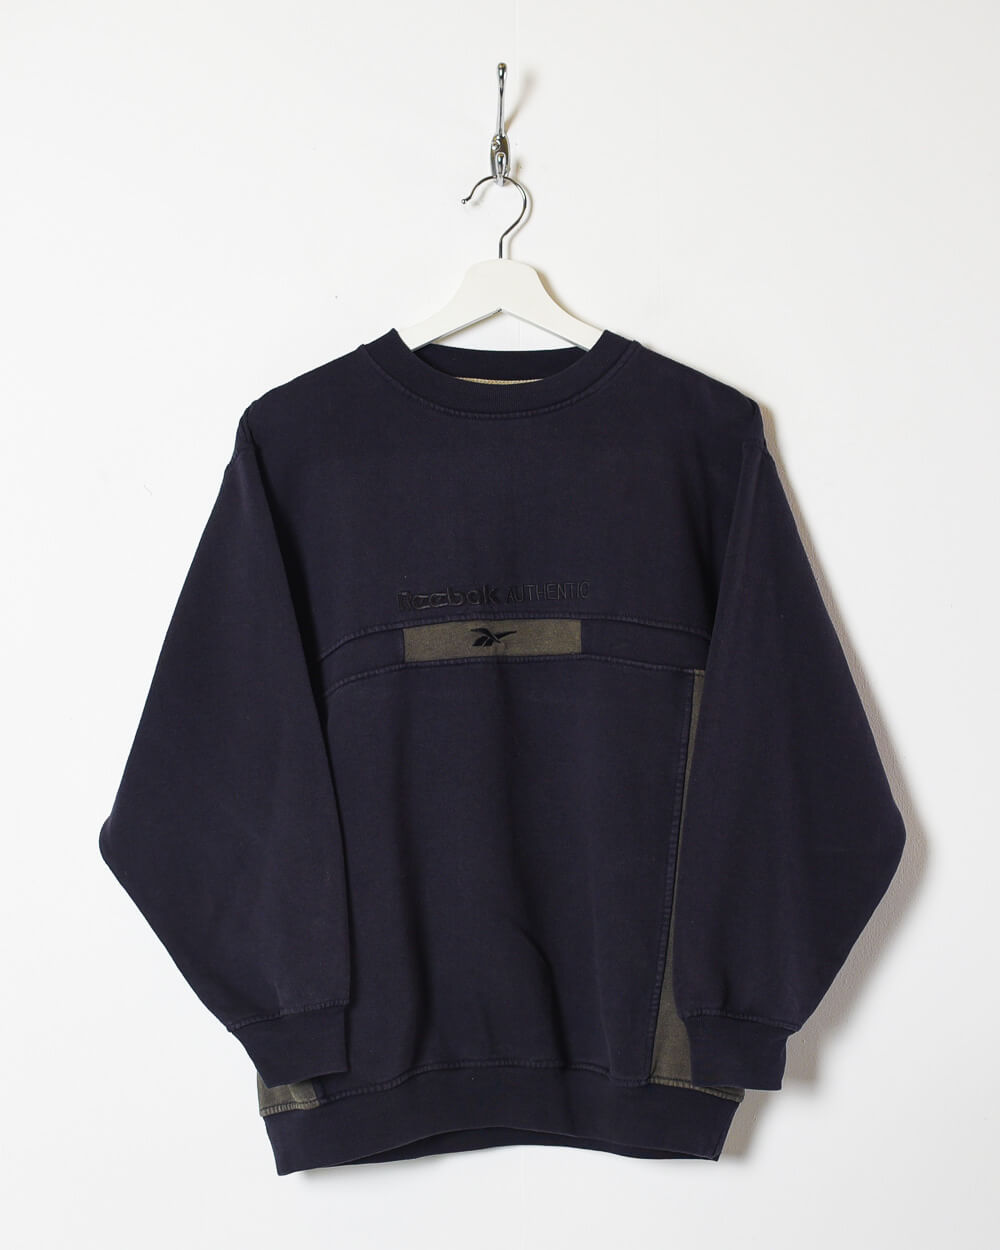 Navy Reebok Authentic Sweatshirt - Small